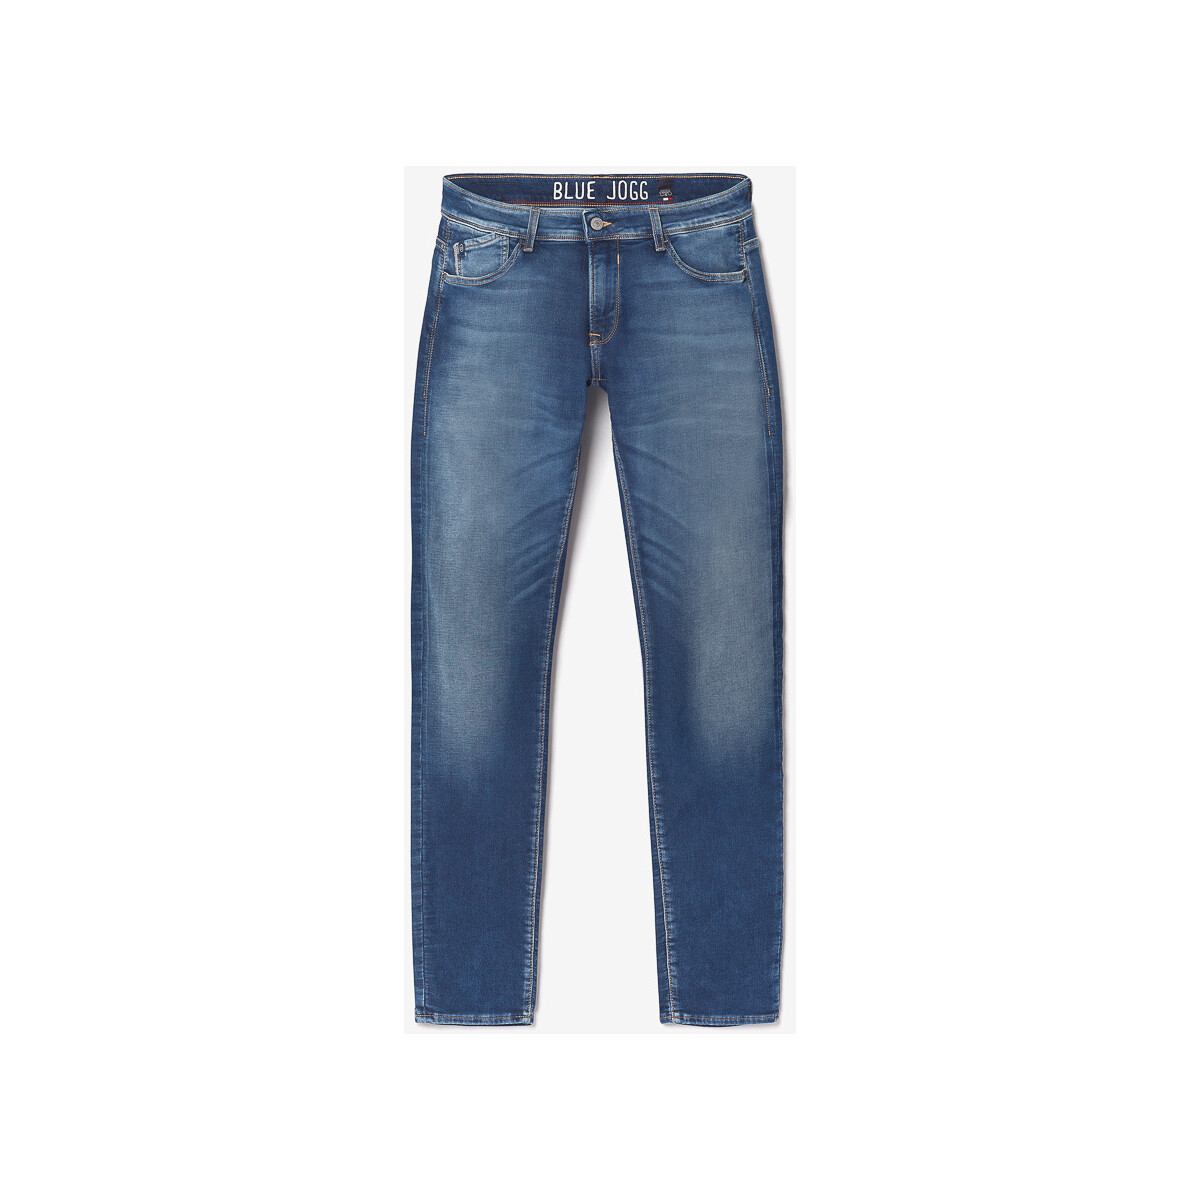 Le Temps des Cerises Bleu Jogg 700/11 adjusted jeans bl